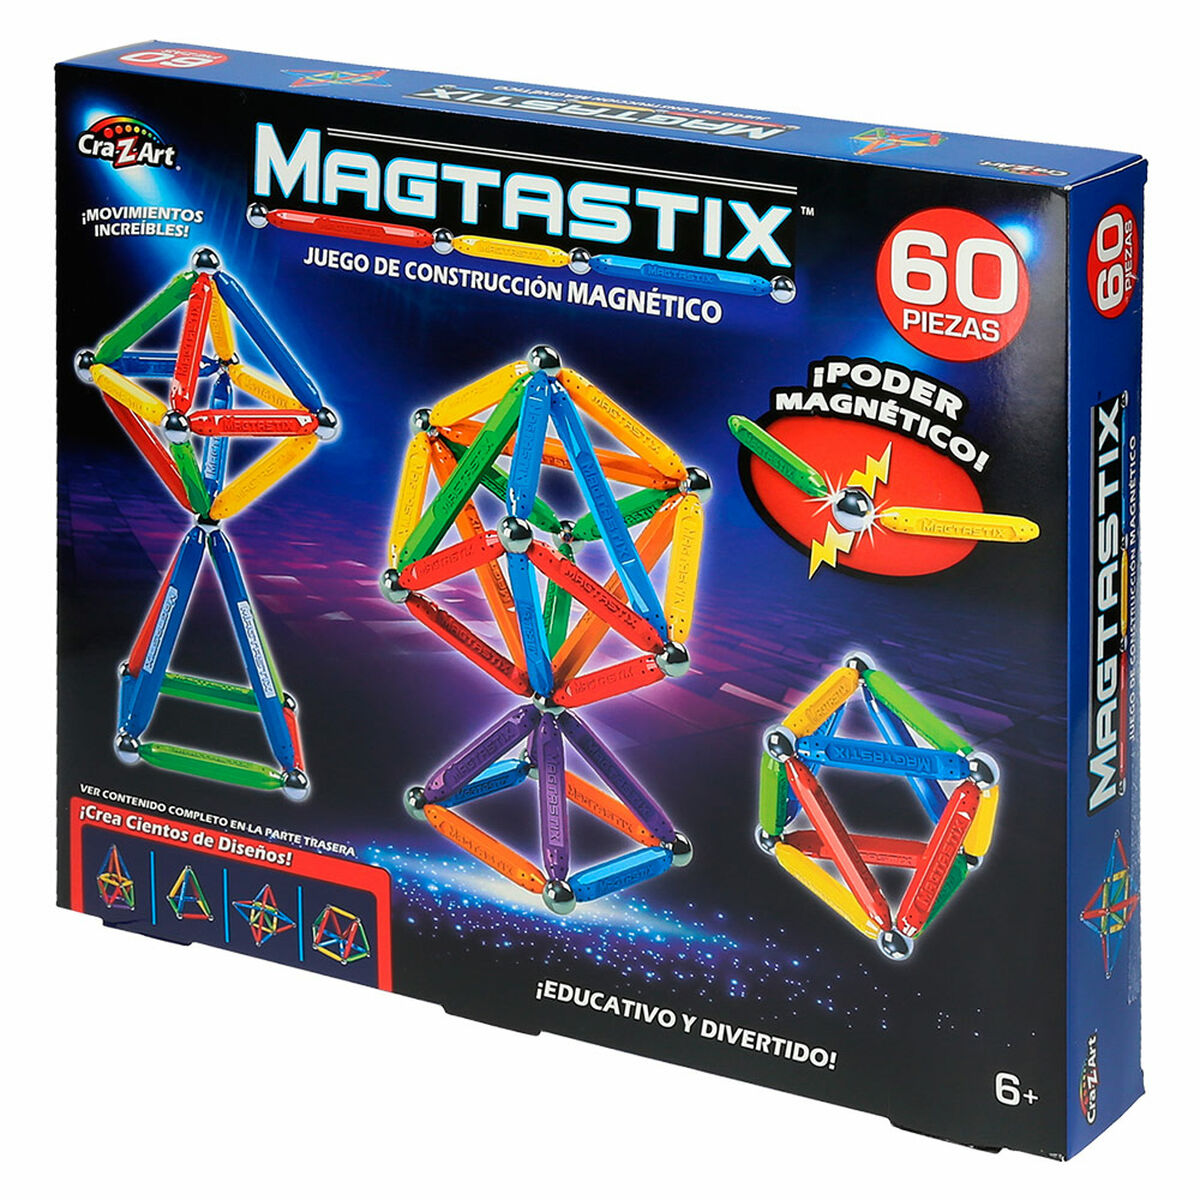 Construction set Cra-Z-Art Magtastix Deluxe 60 Pieces (4 Units) - YOKE FINDS 🇮🇪 IE 